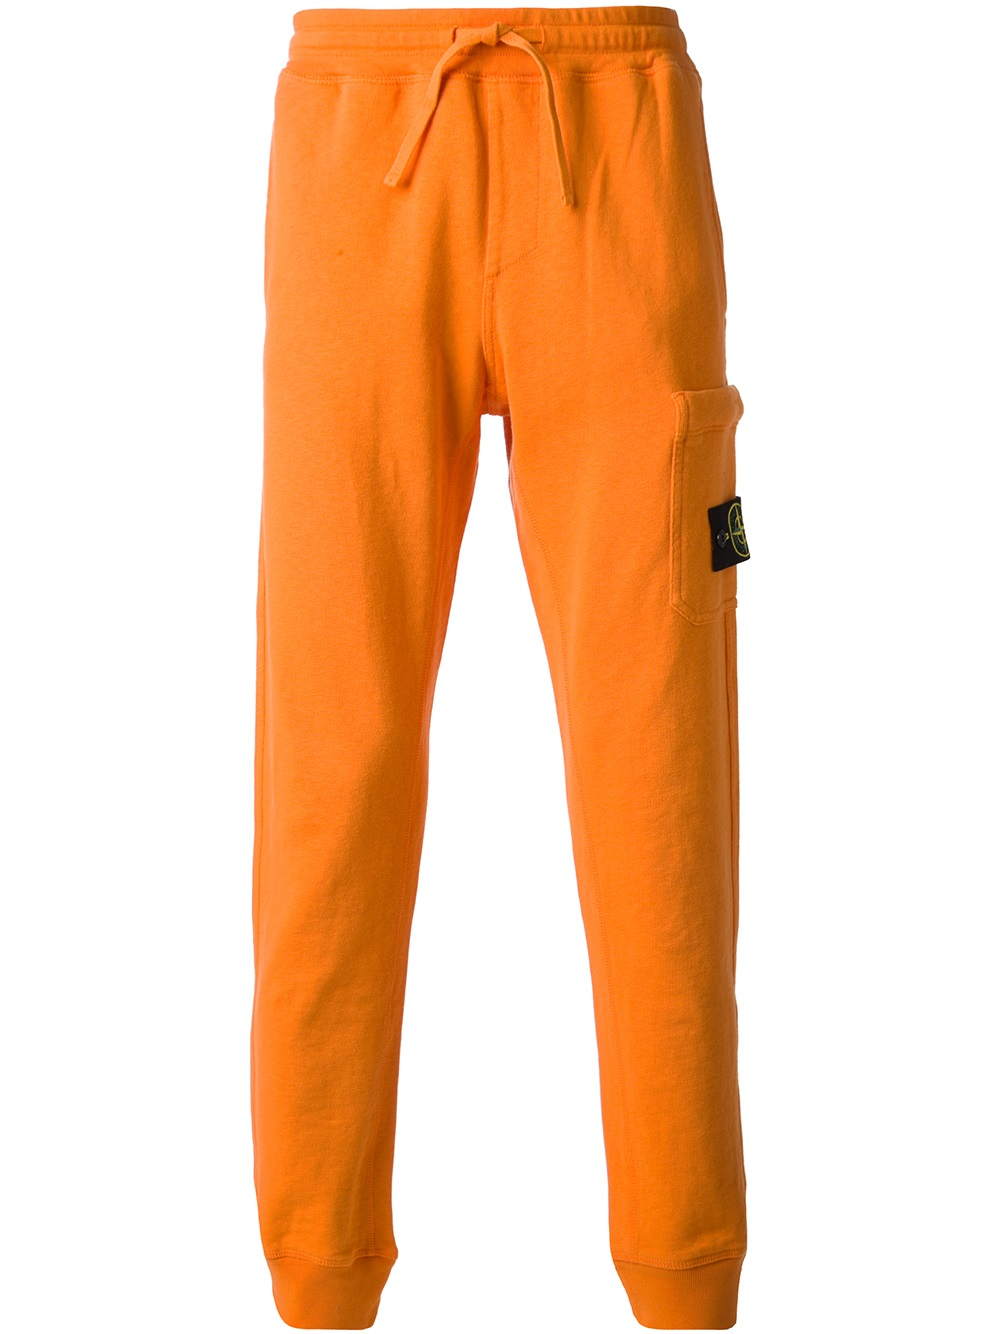 Stone Island Track Pants in Orange for Men - Lyst